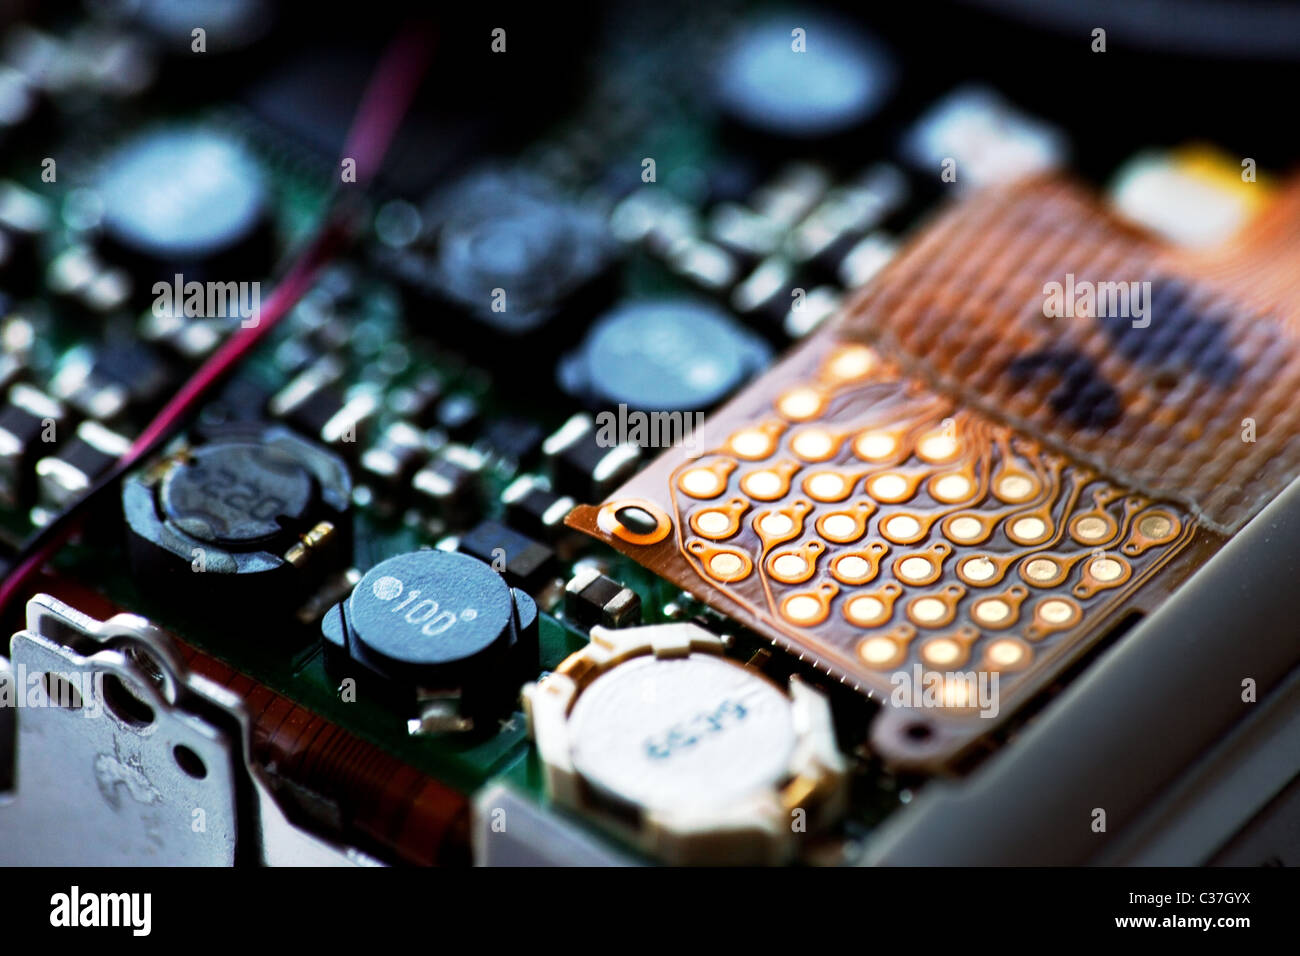 Elektronikplatine Stockfoto